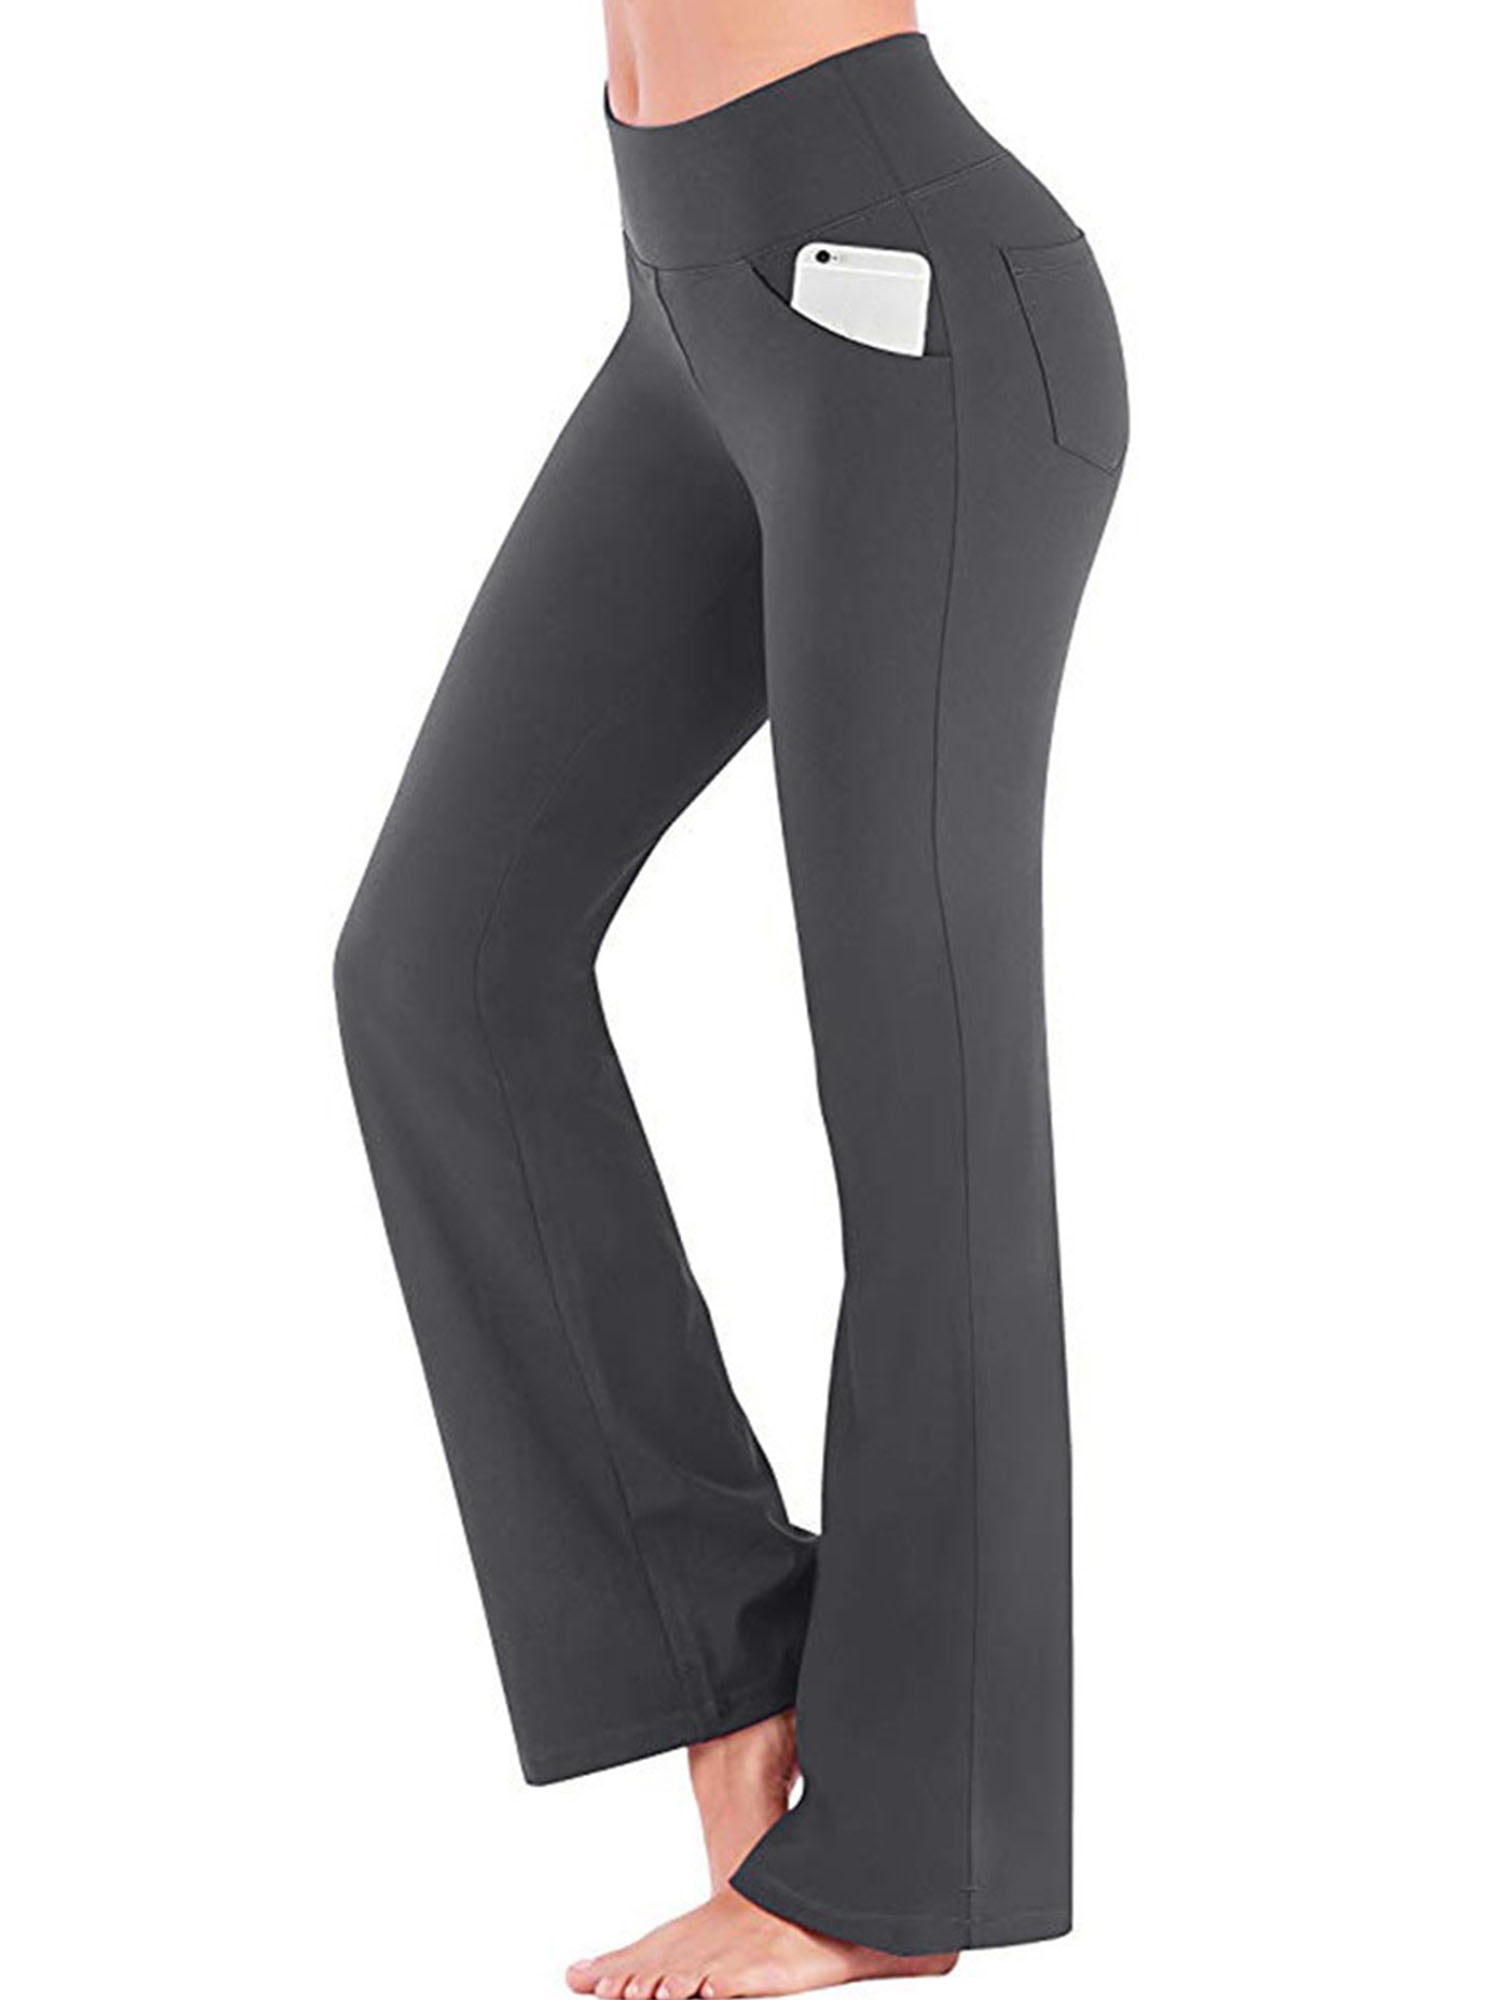 BALEAF Women's Yoga Dress Pants - Stretchy Work Slacks with Pockets